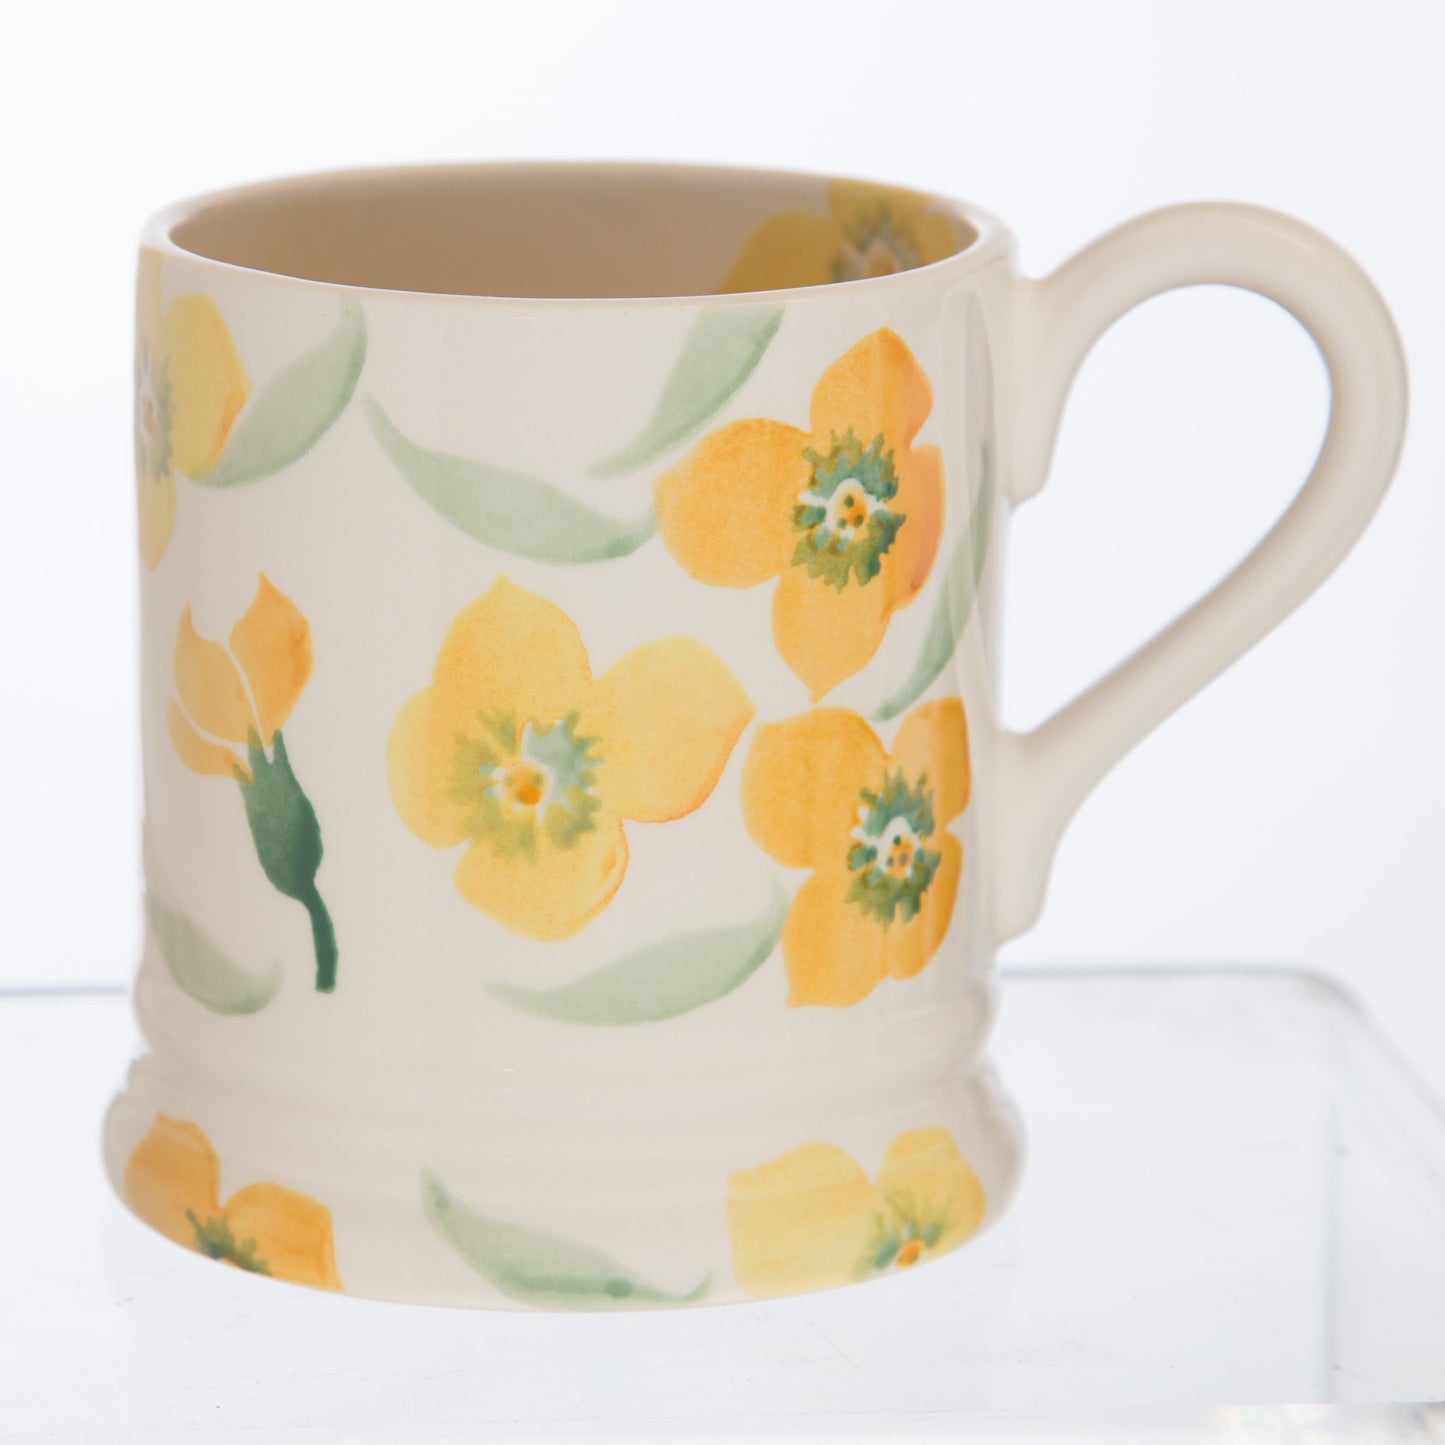 Flower half pint mug from Emma Bridgewater